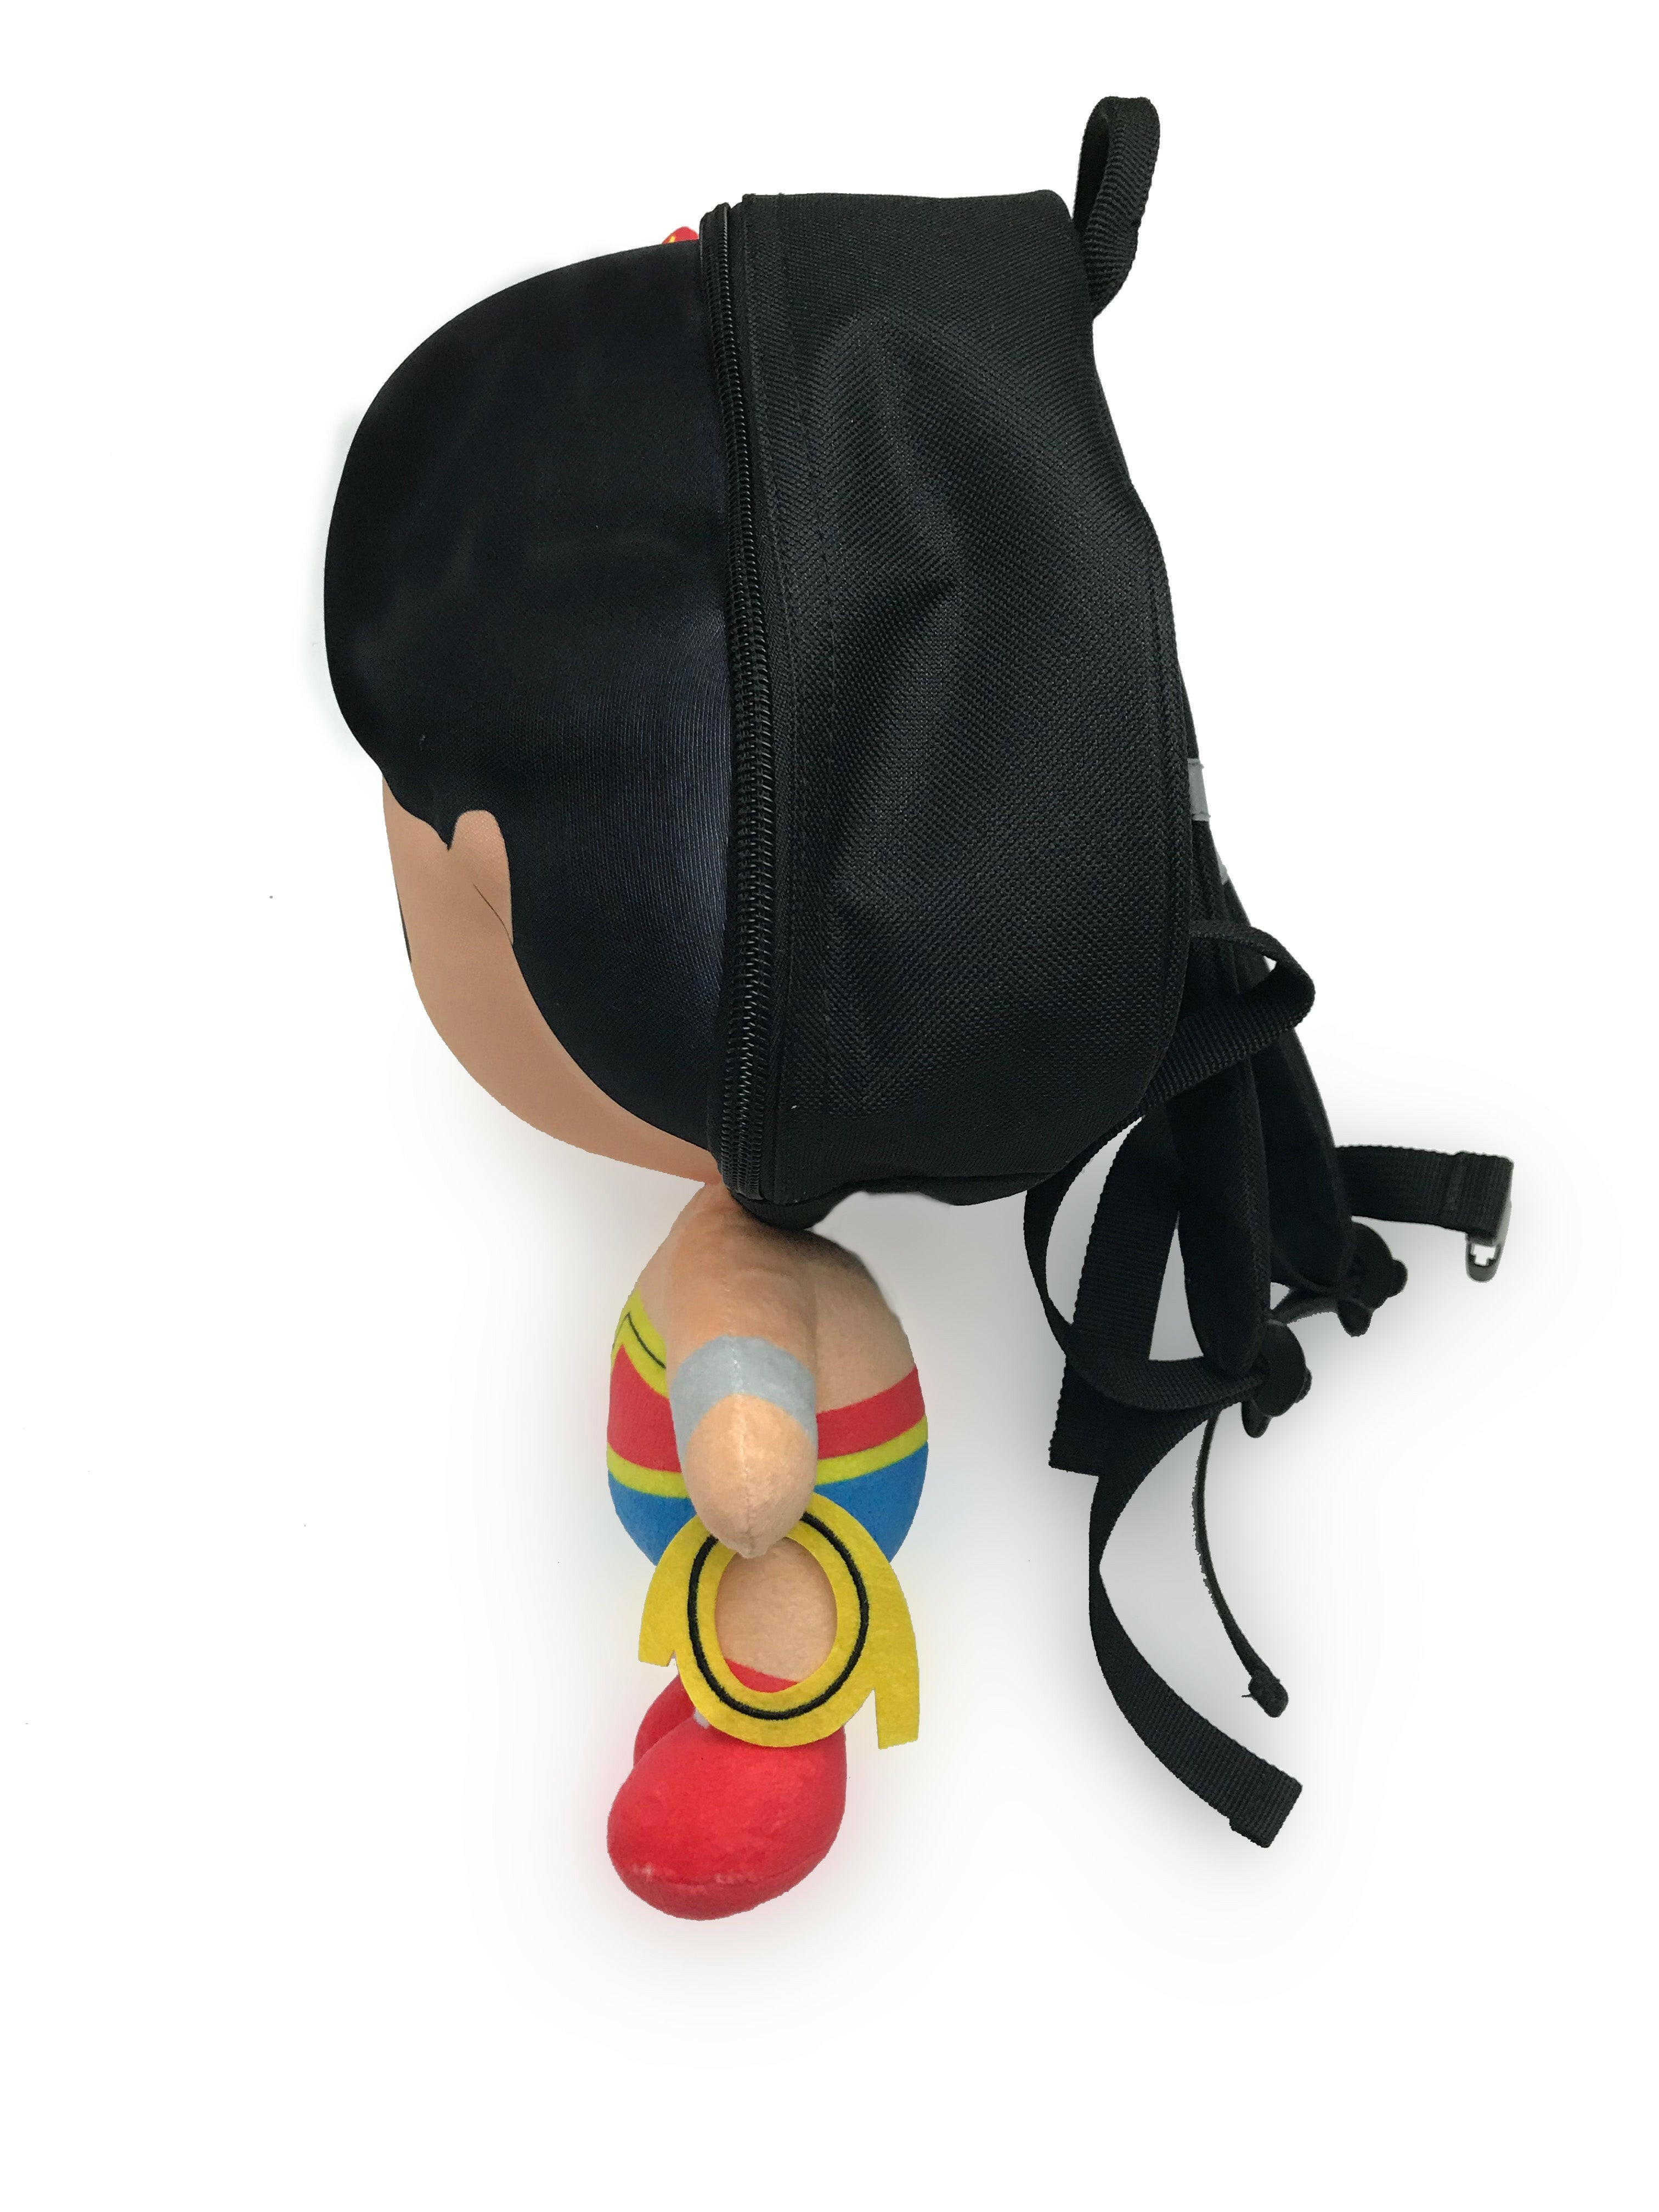 Justice League Wonder Woman Mini Travel Adjustable Kids Backpack.